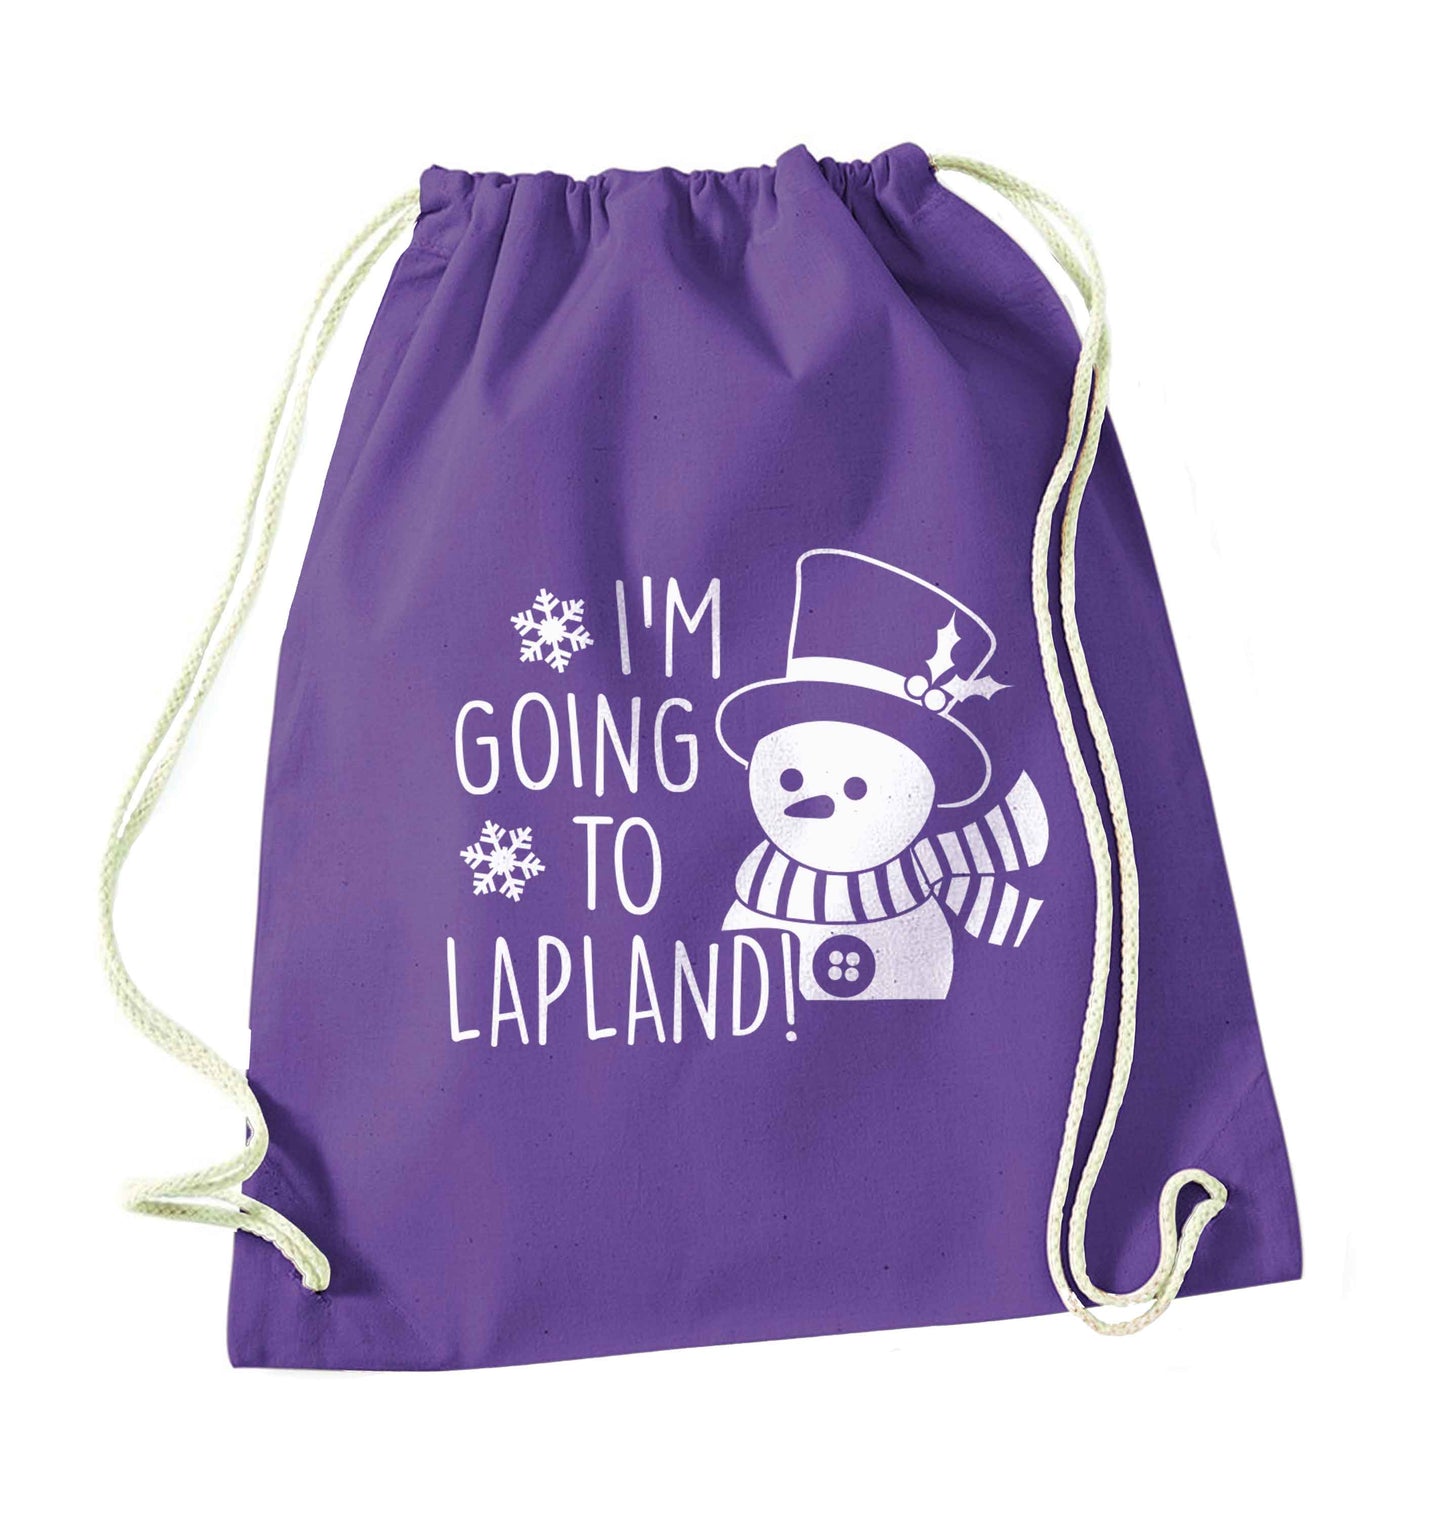 I'm going to Lapland purple drawstring bag